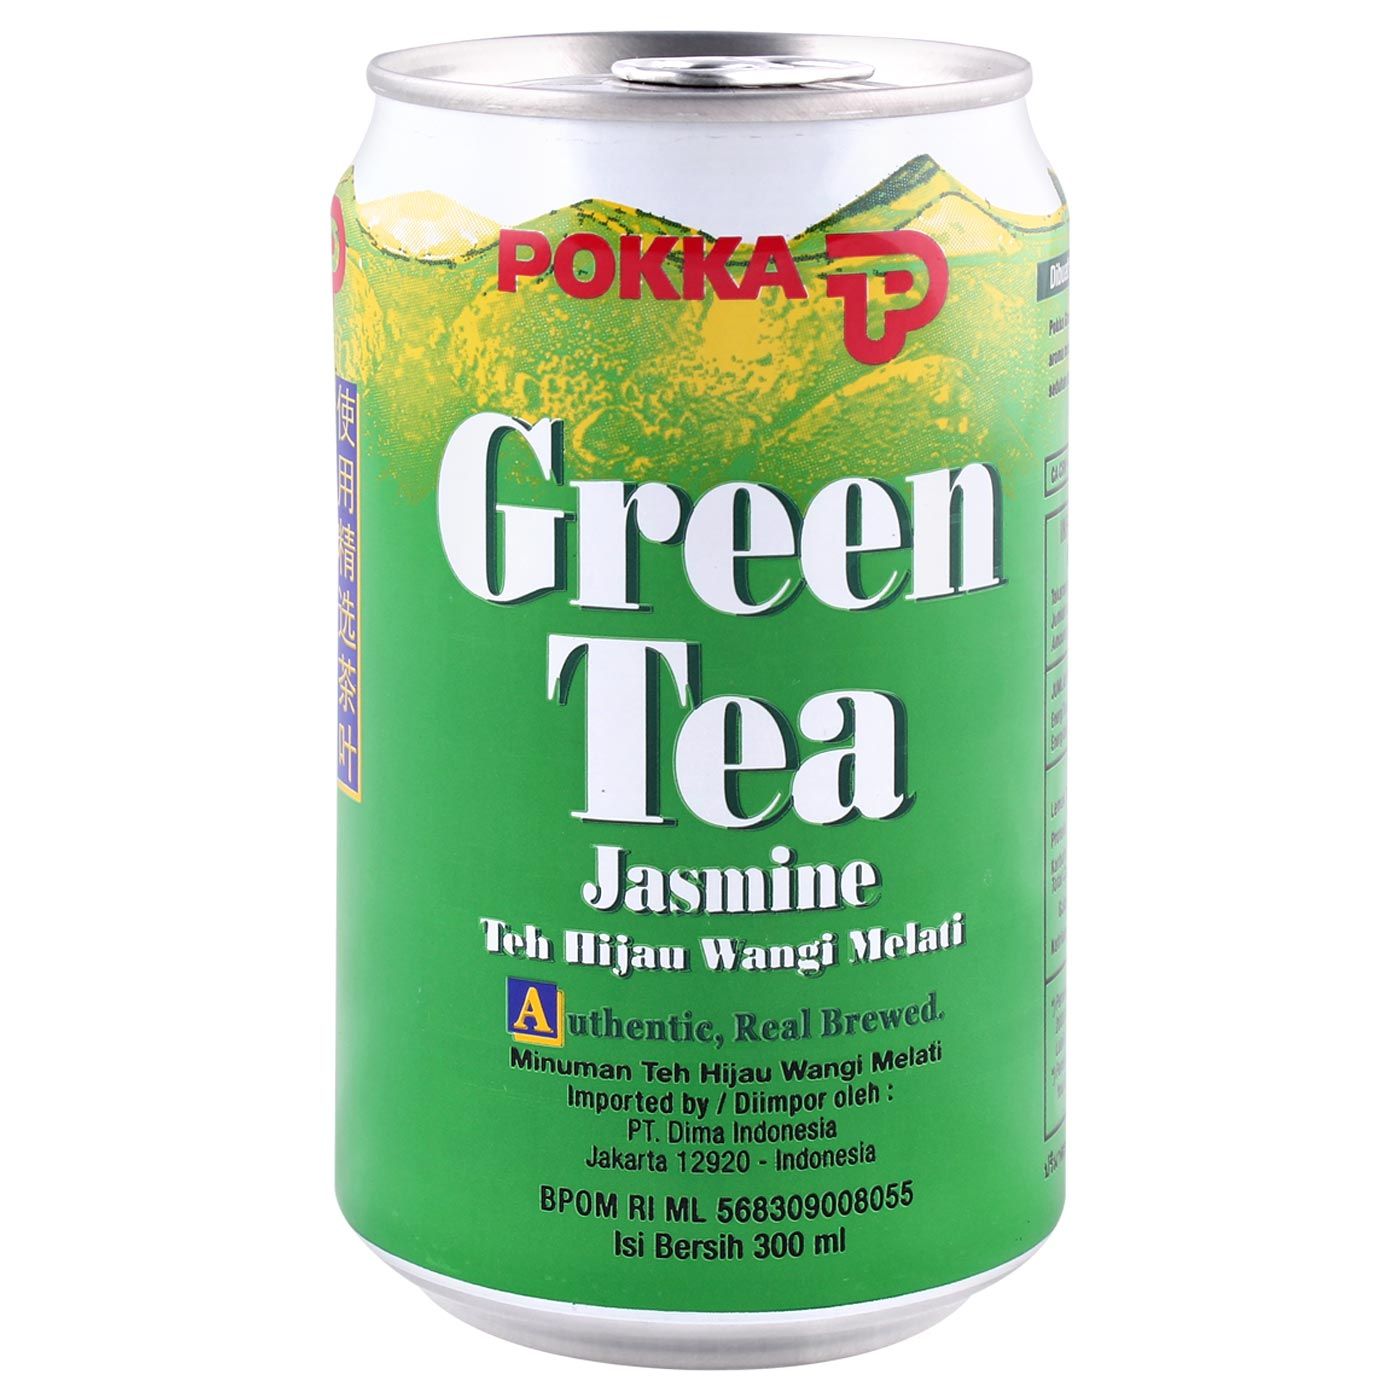 Pokka Jasmine Green Tea Klg (300mL) - 1